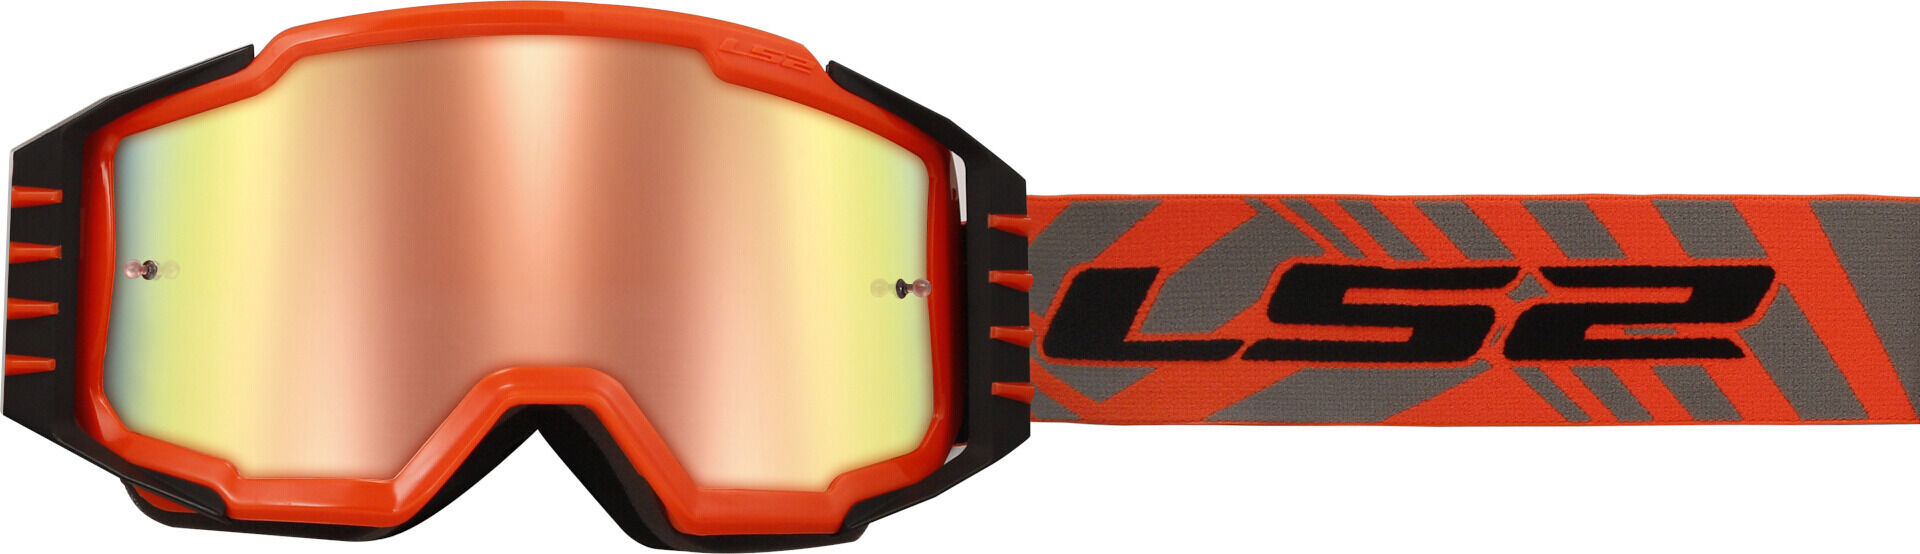 LS2 Charger Pro Gafas de motocross - Naranja